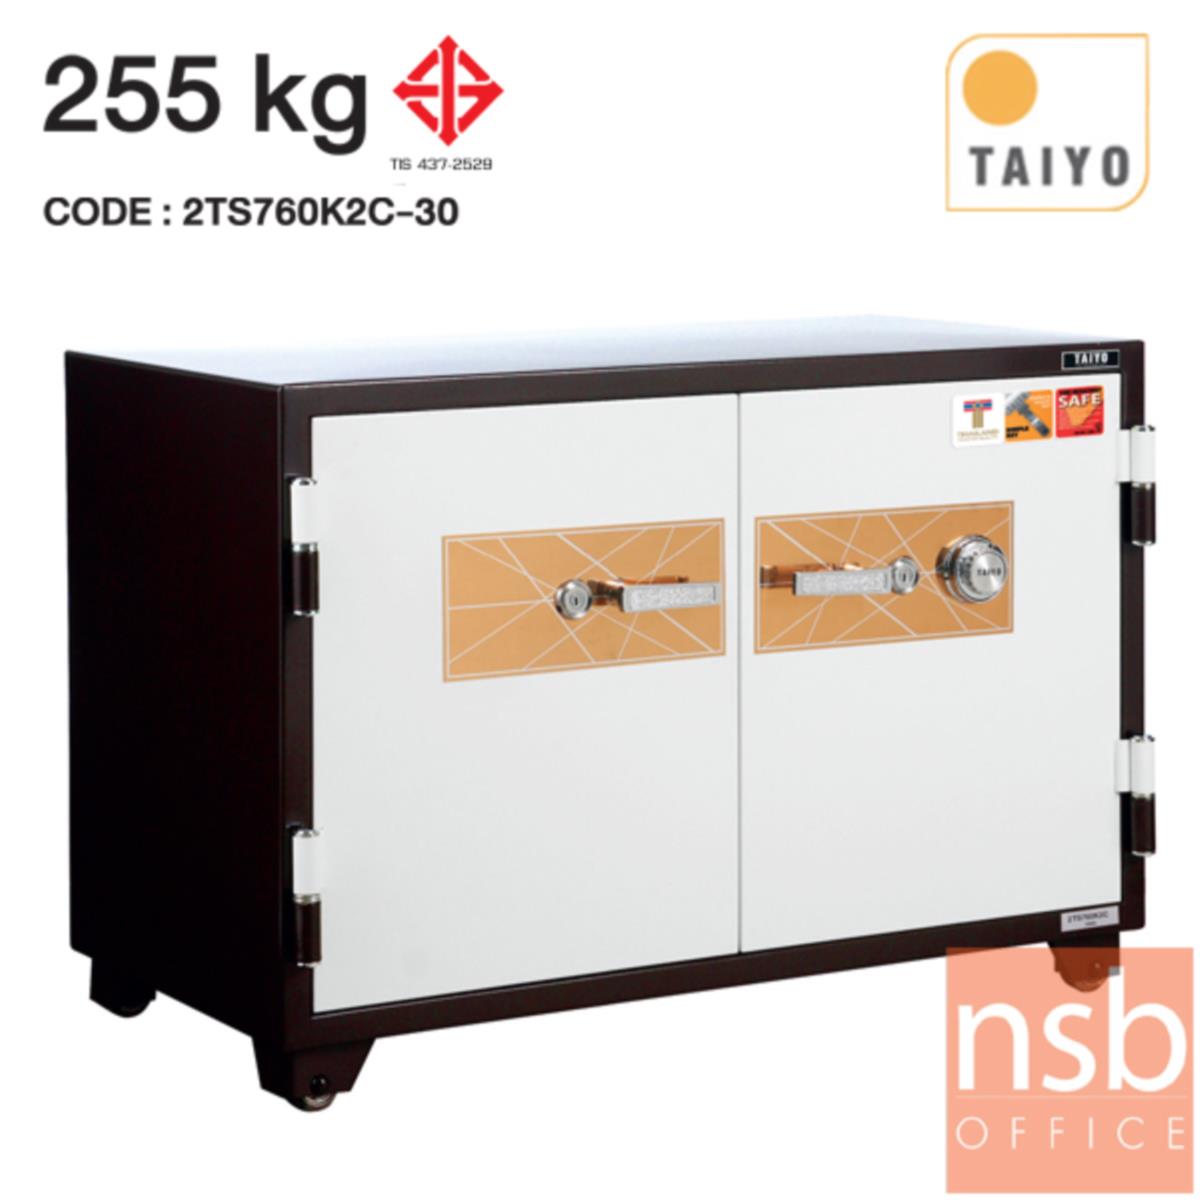 F01A035:ตู้เซฟ TAIYO Pink Gold น้ำหนัก 255 กก.มี มอก. 2 บานเปิด (2TS760K2C-30)   